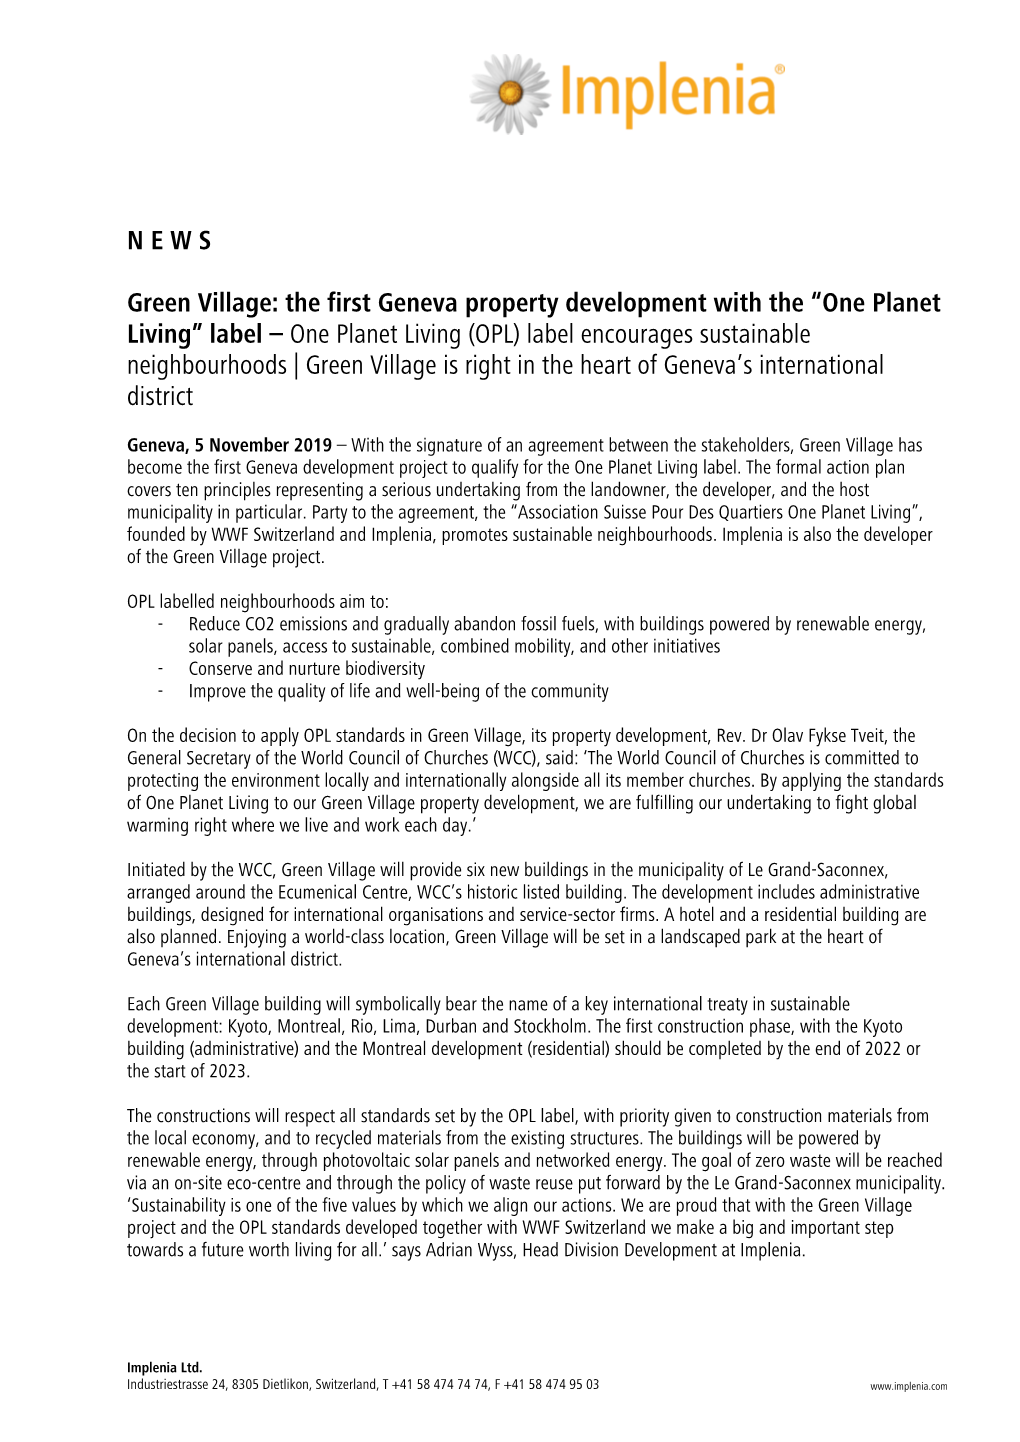 NEWS Green Village: the First Geneva Property Development With